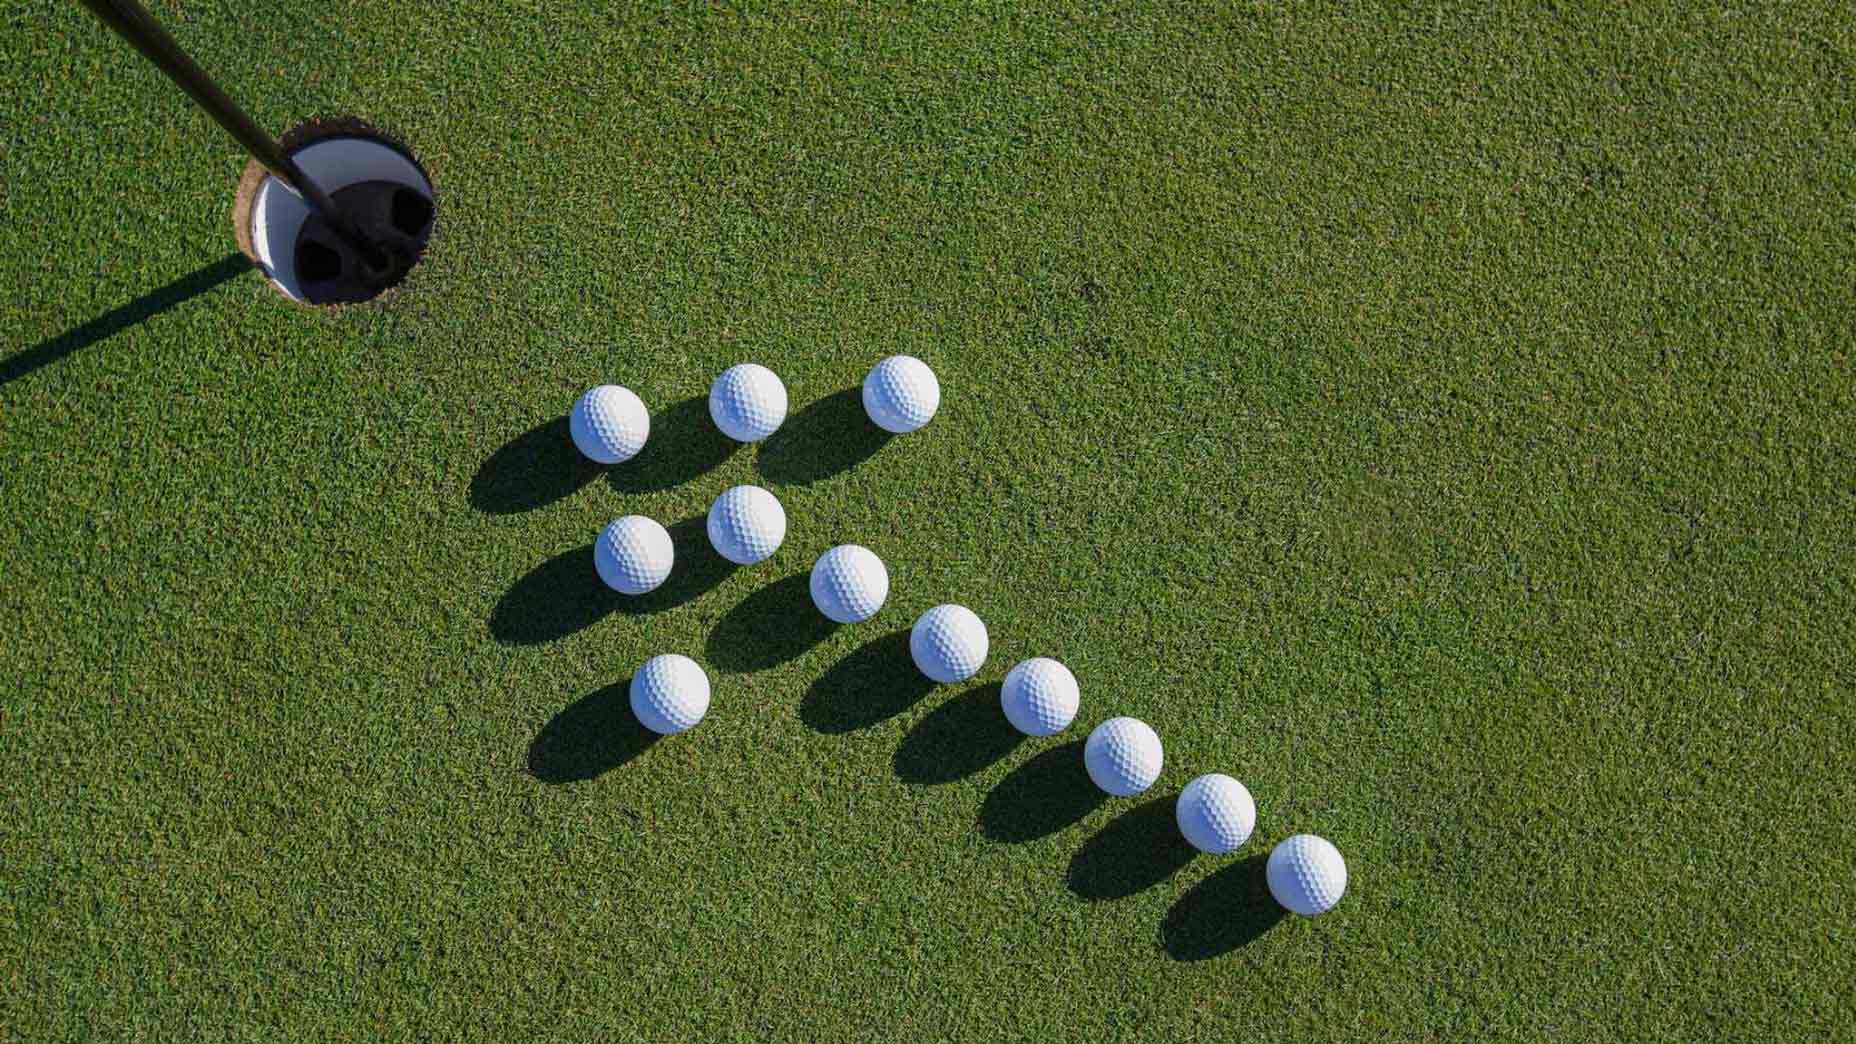 golf balls in arrow formation on green